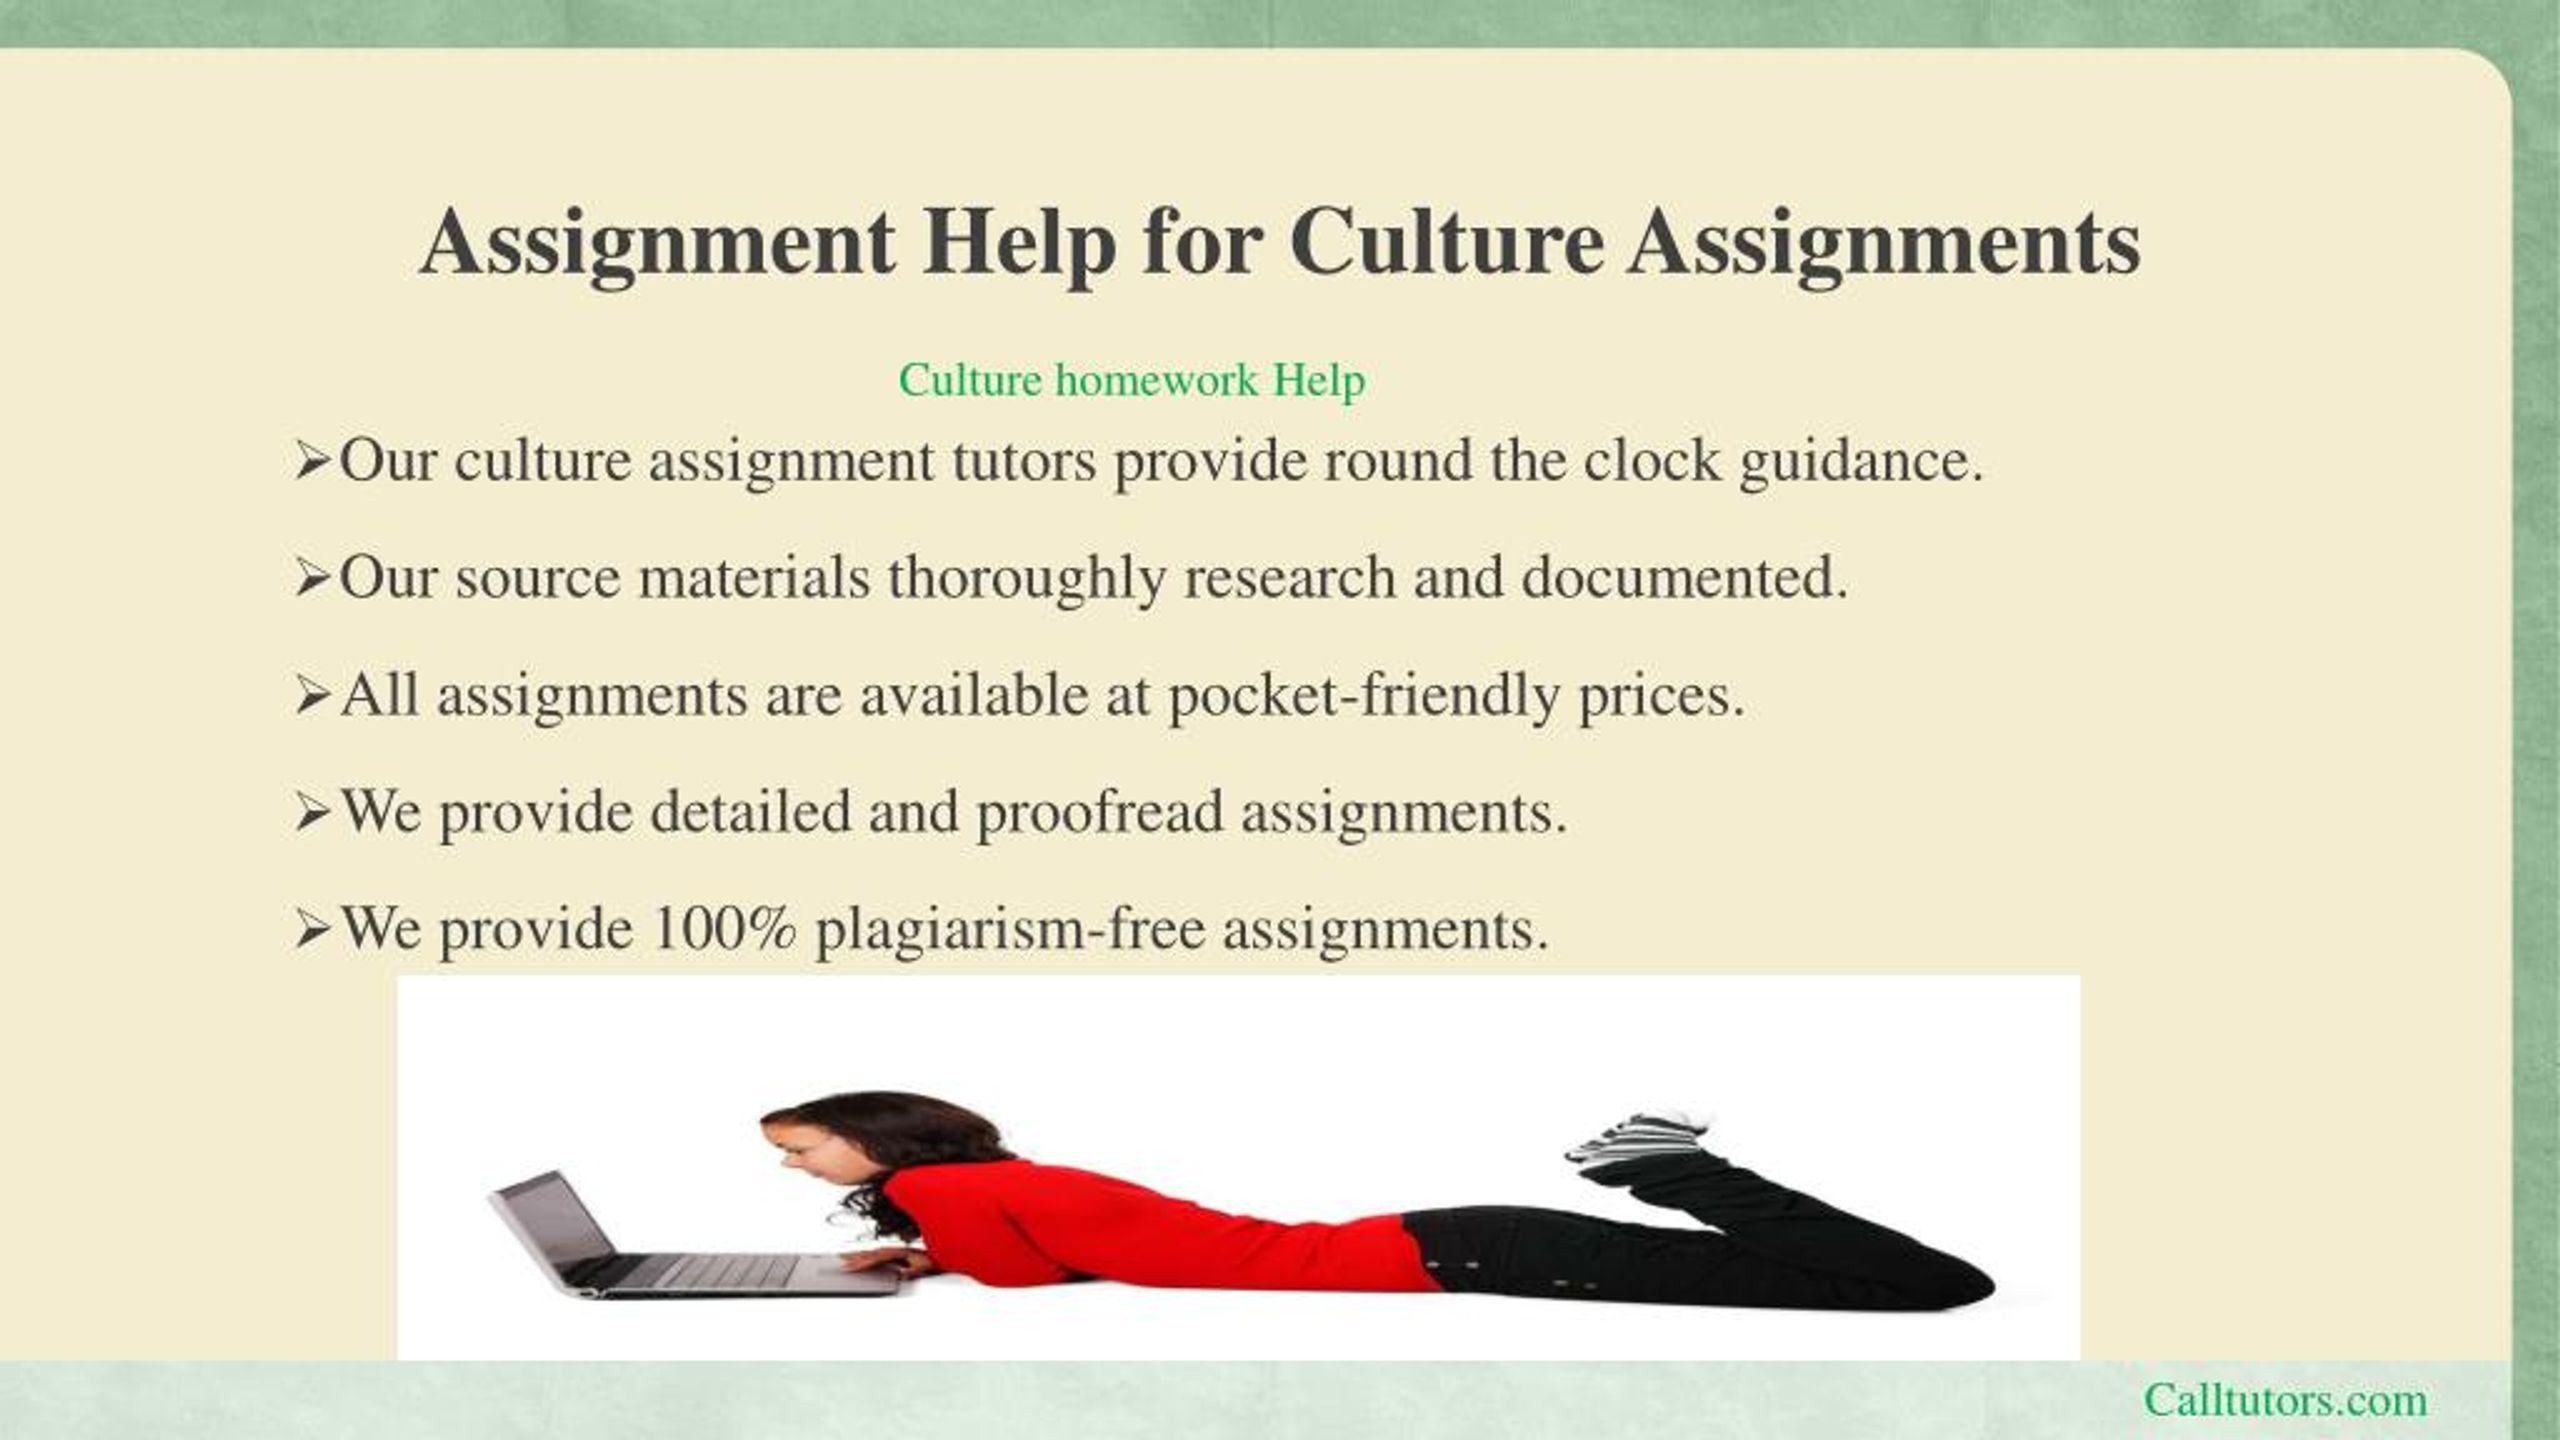 culture presentation assignment